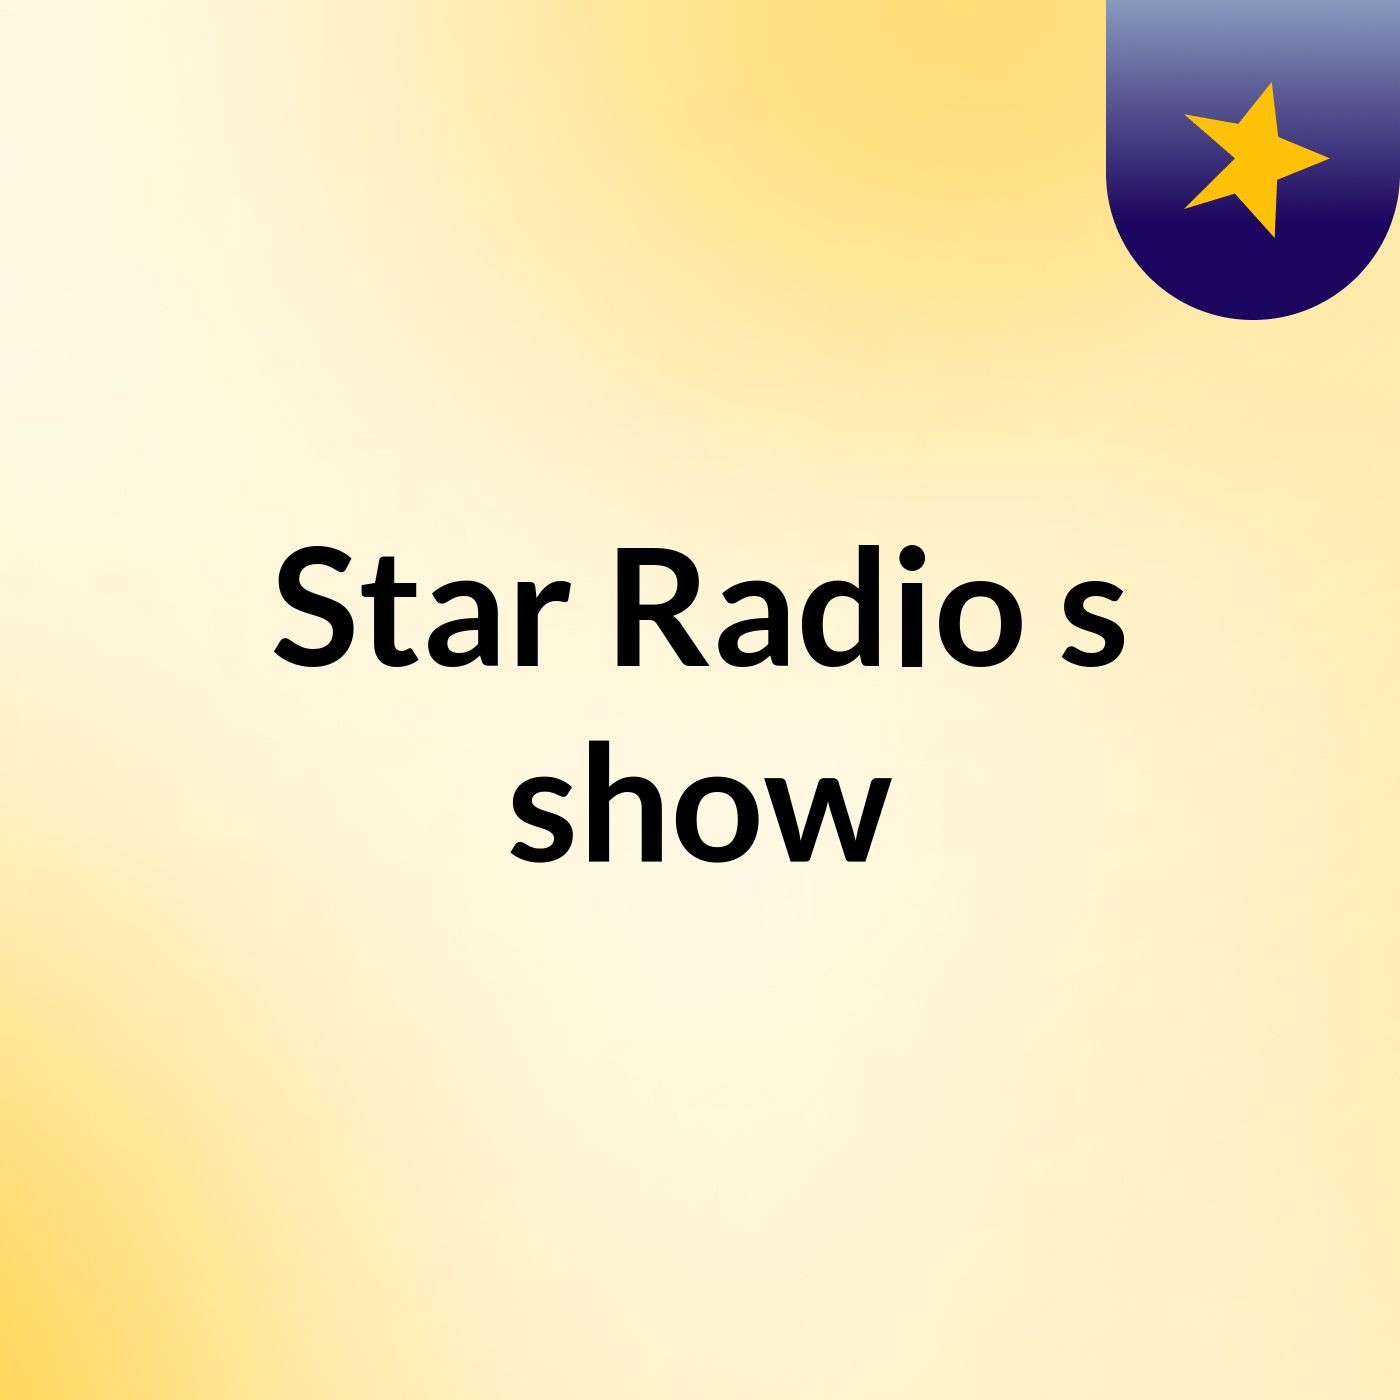 Star Radio's show